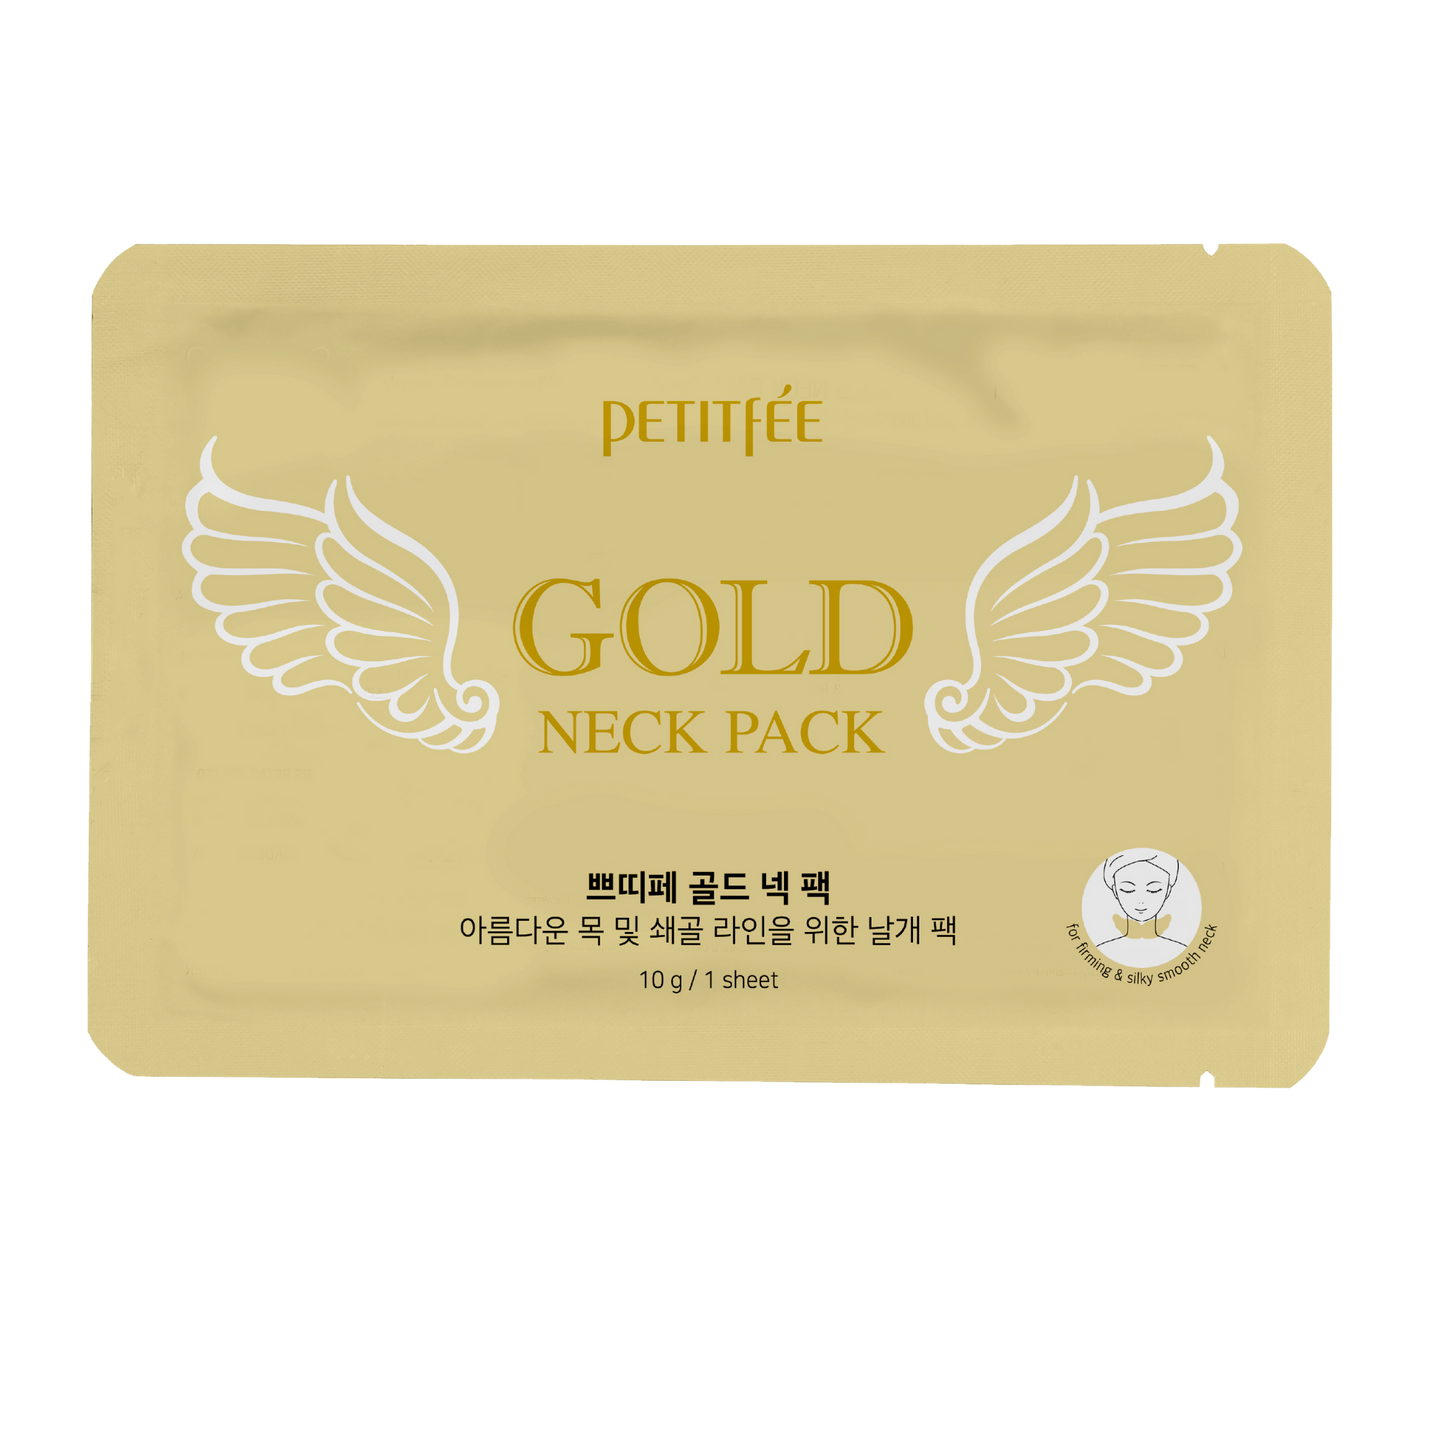 Petitfèe Gold Neck Pack (1stk)